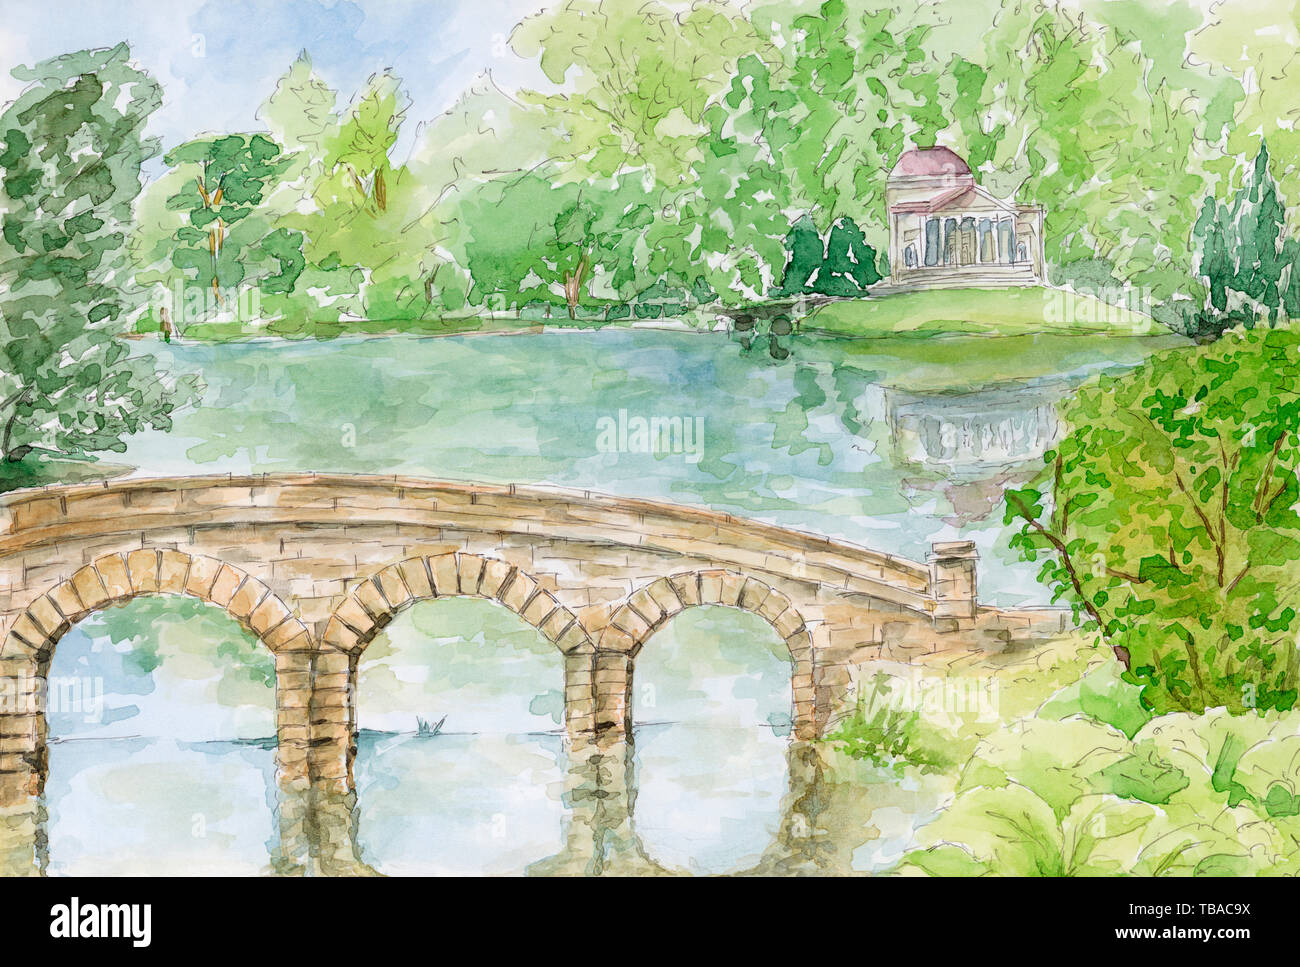 Stourhead Garden. The Palladian Bridge and Pantheon. Stourhead, UK. Pencil and watercolor on paper. Stock Photo